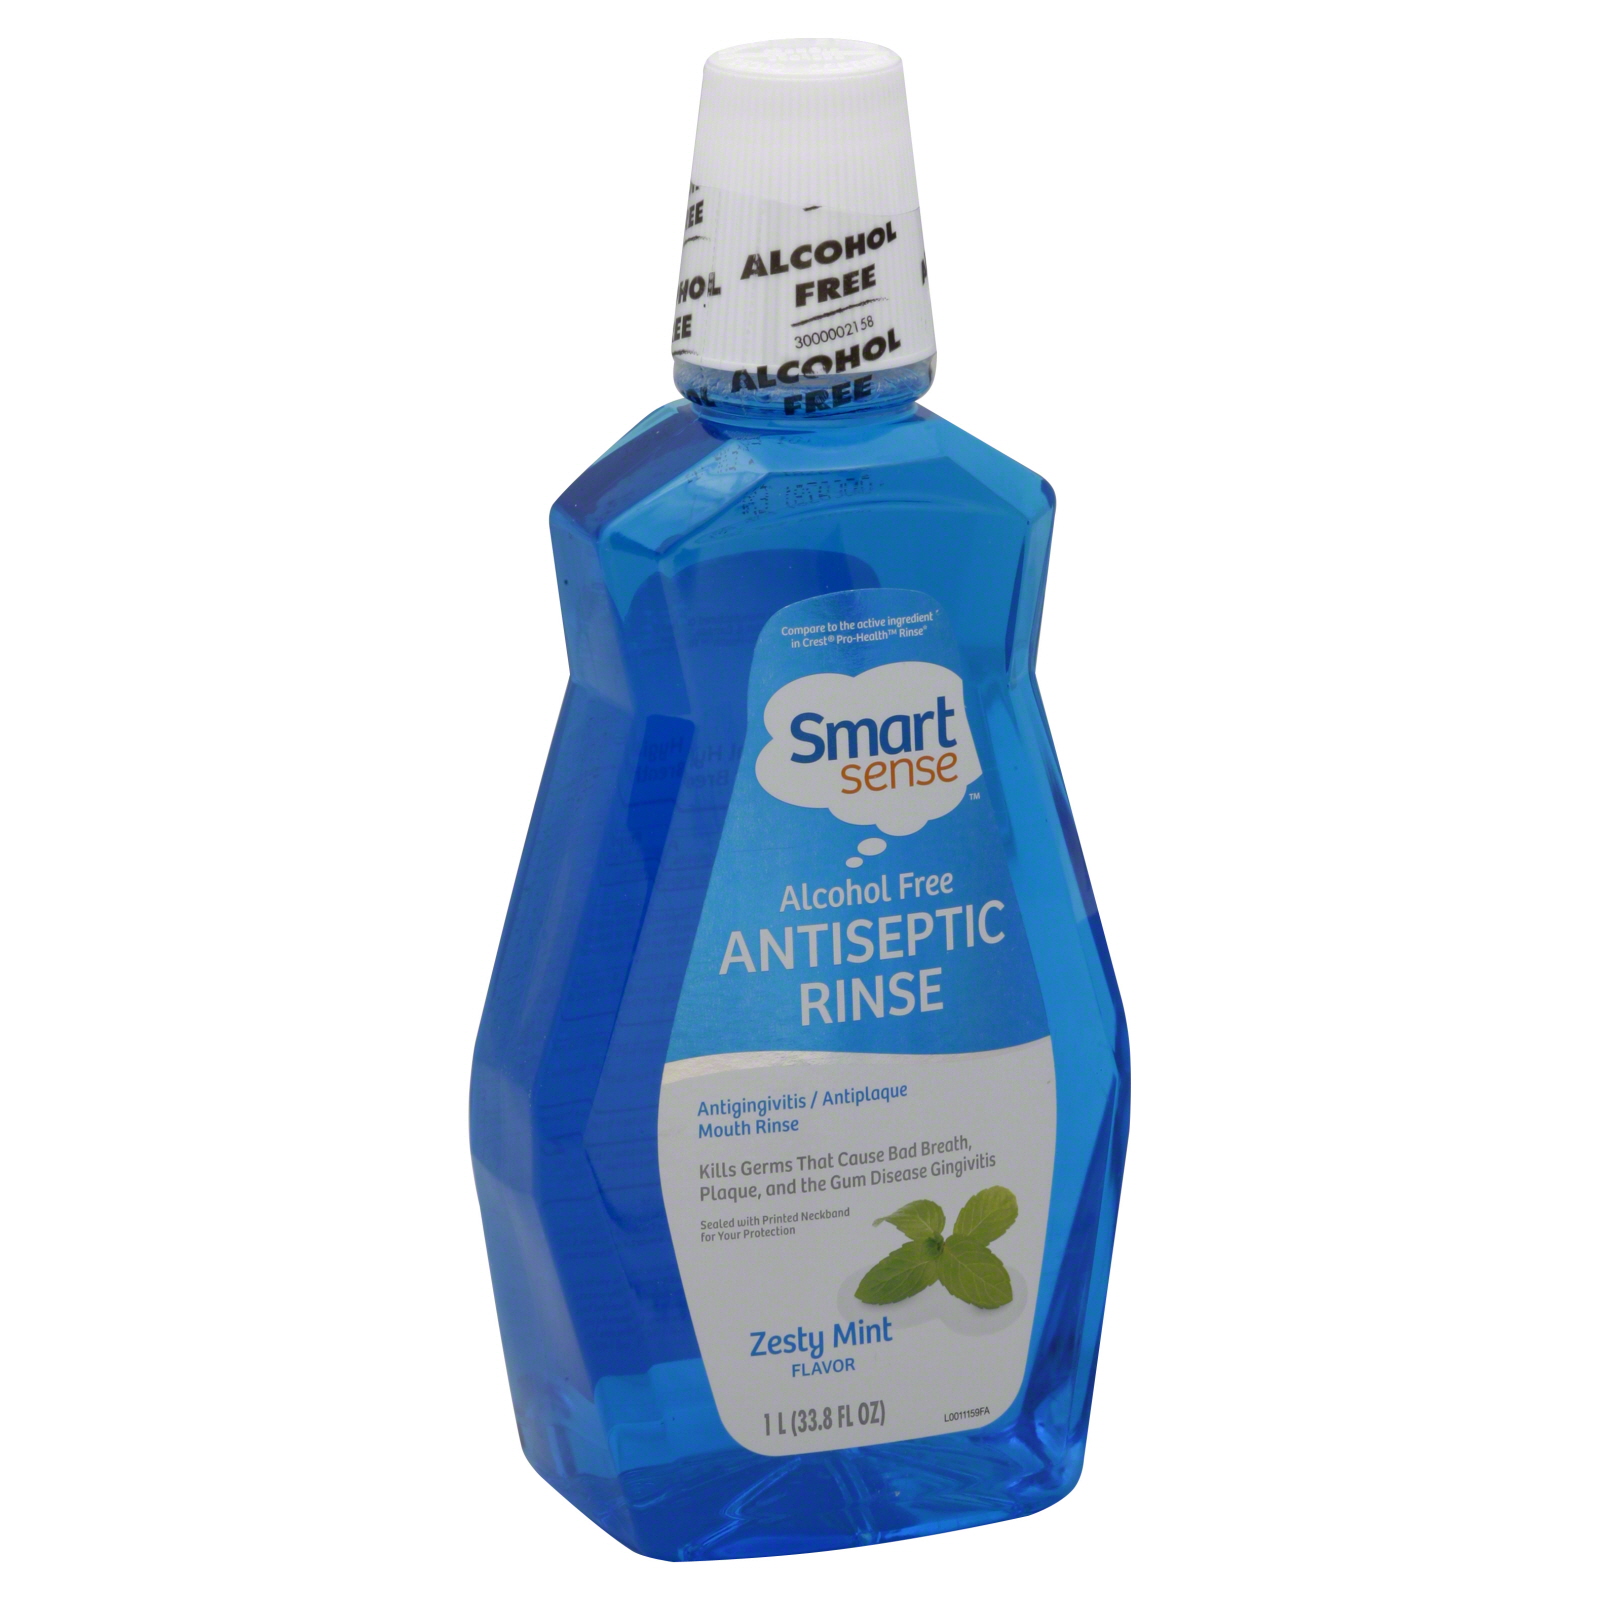 Smart Sense Antiseptic Rinse, Zesty Mint Flavor, 33.8 fl oz (1 lt)